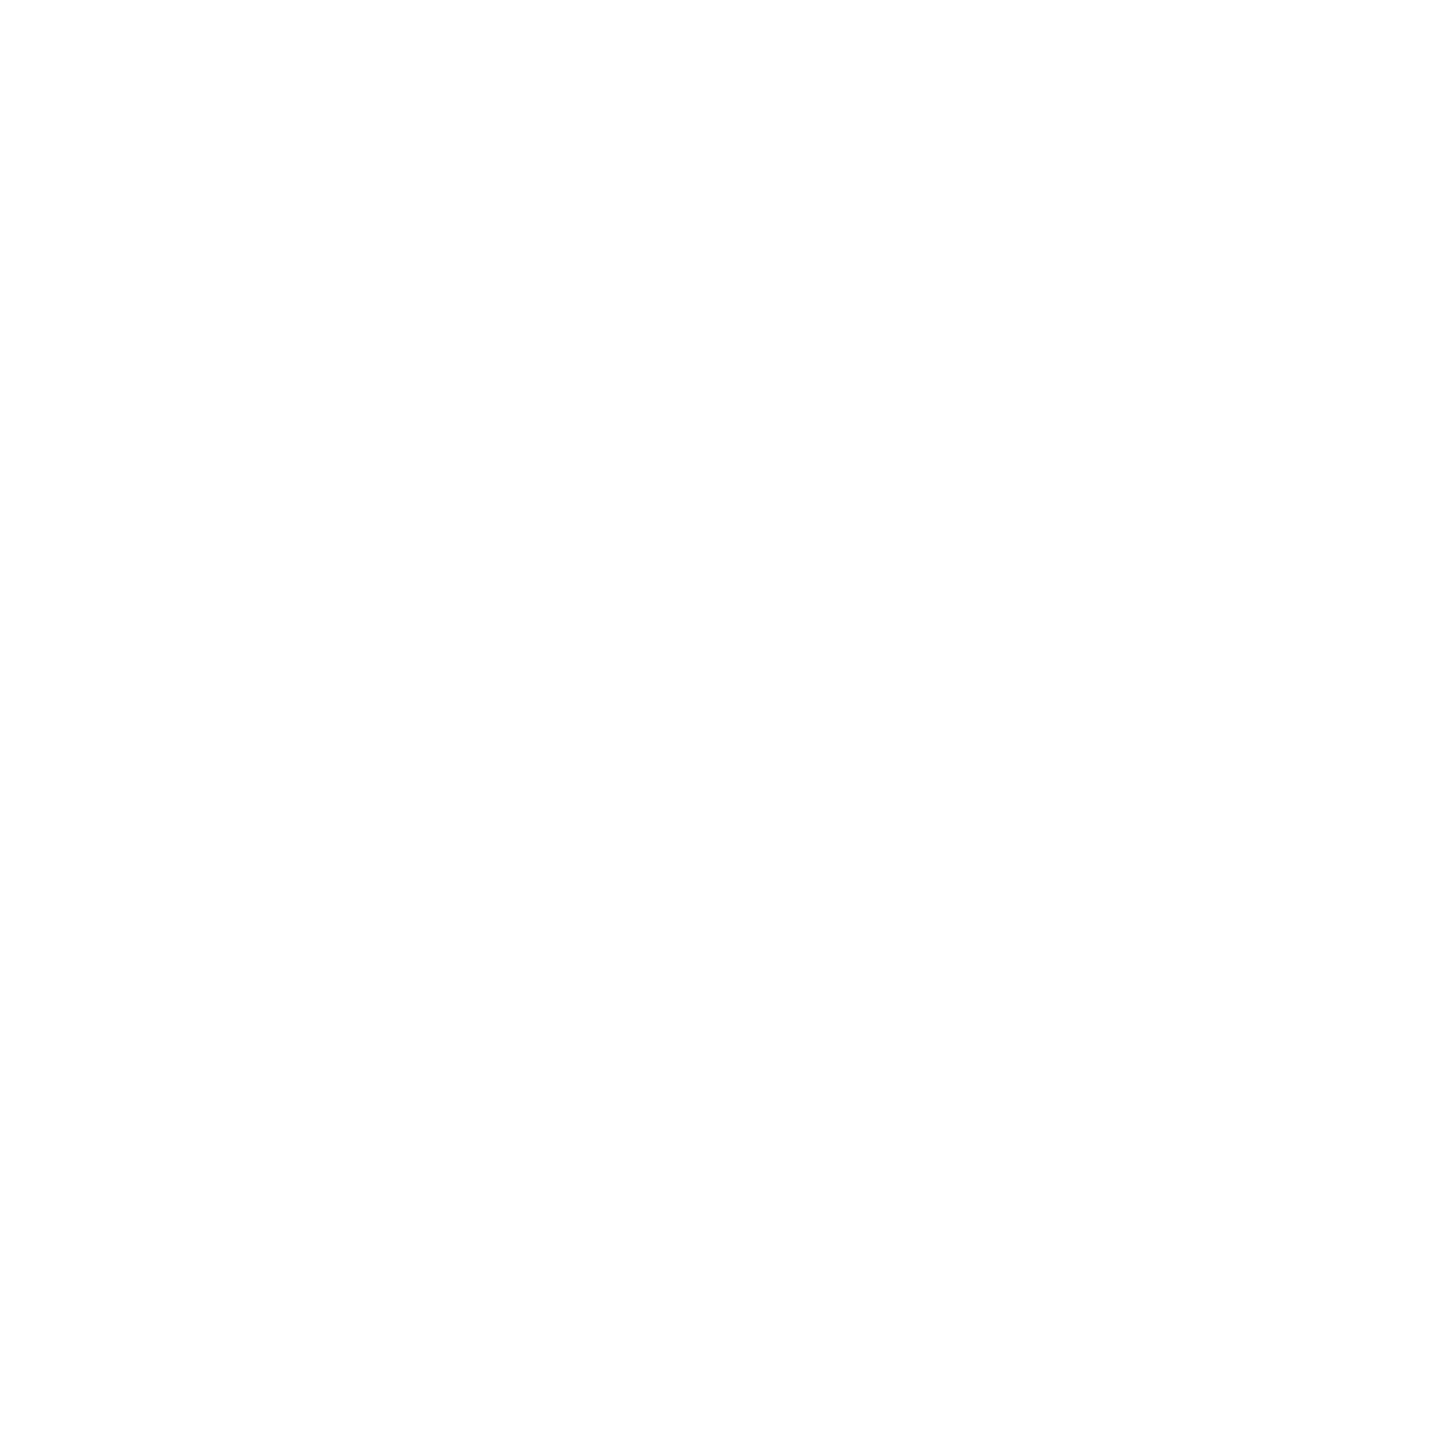 NEMBA | Business Networking Minneapolis, MN 